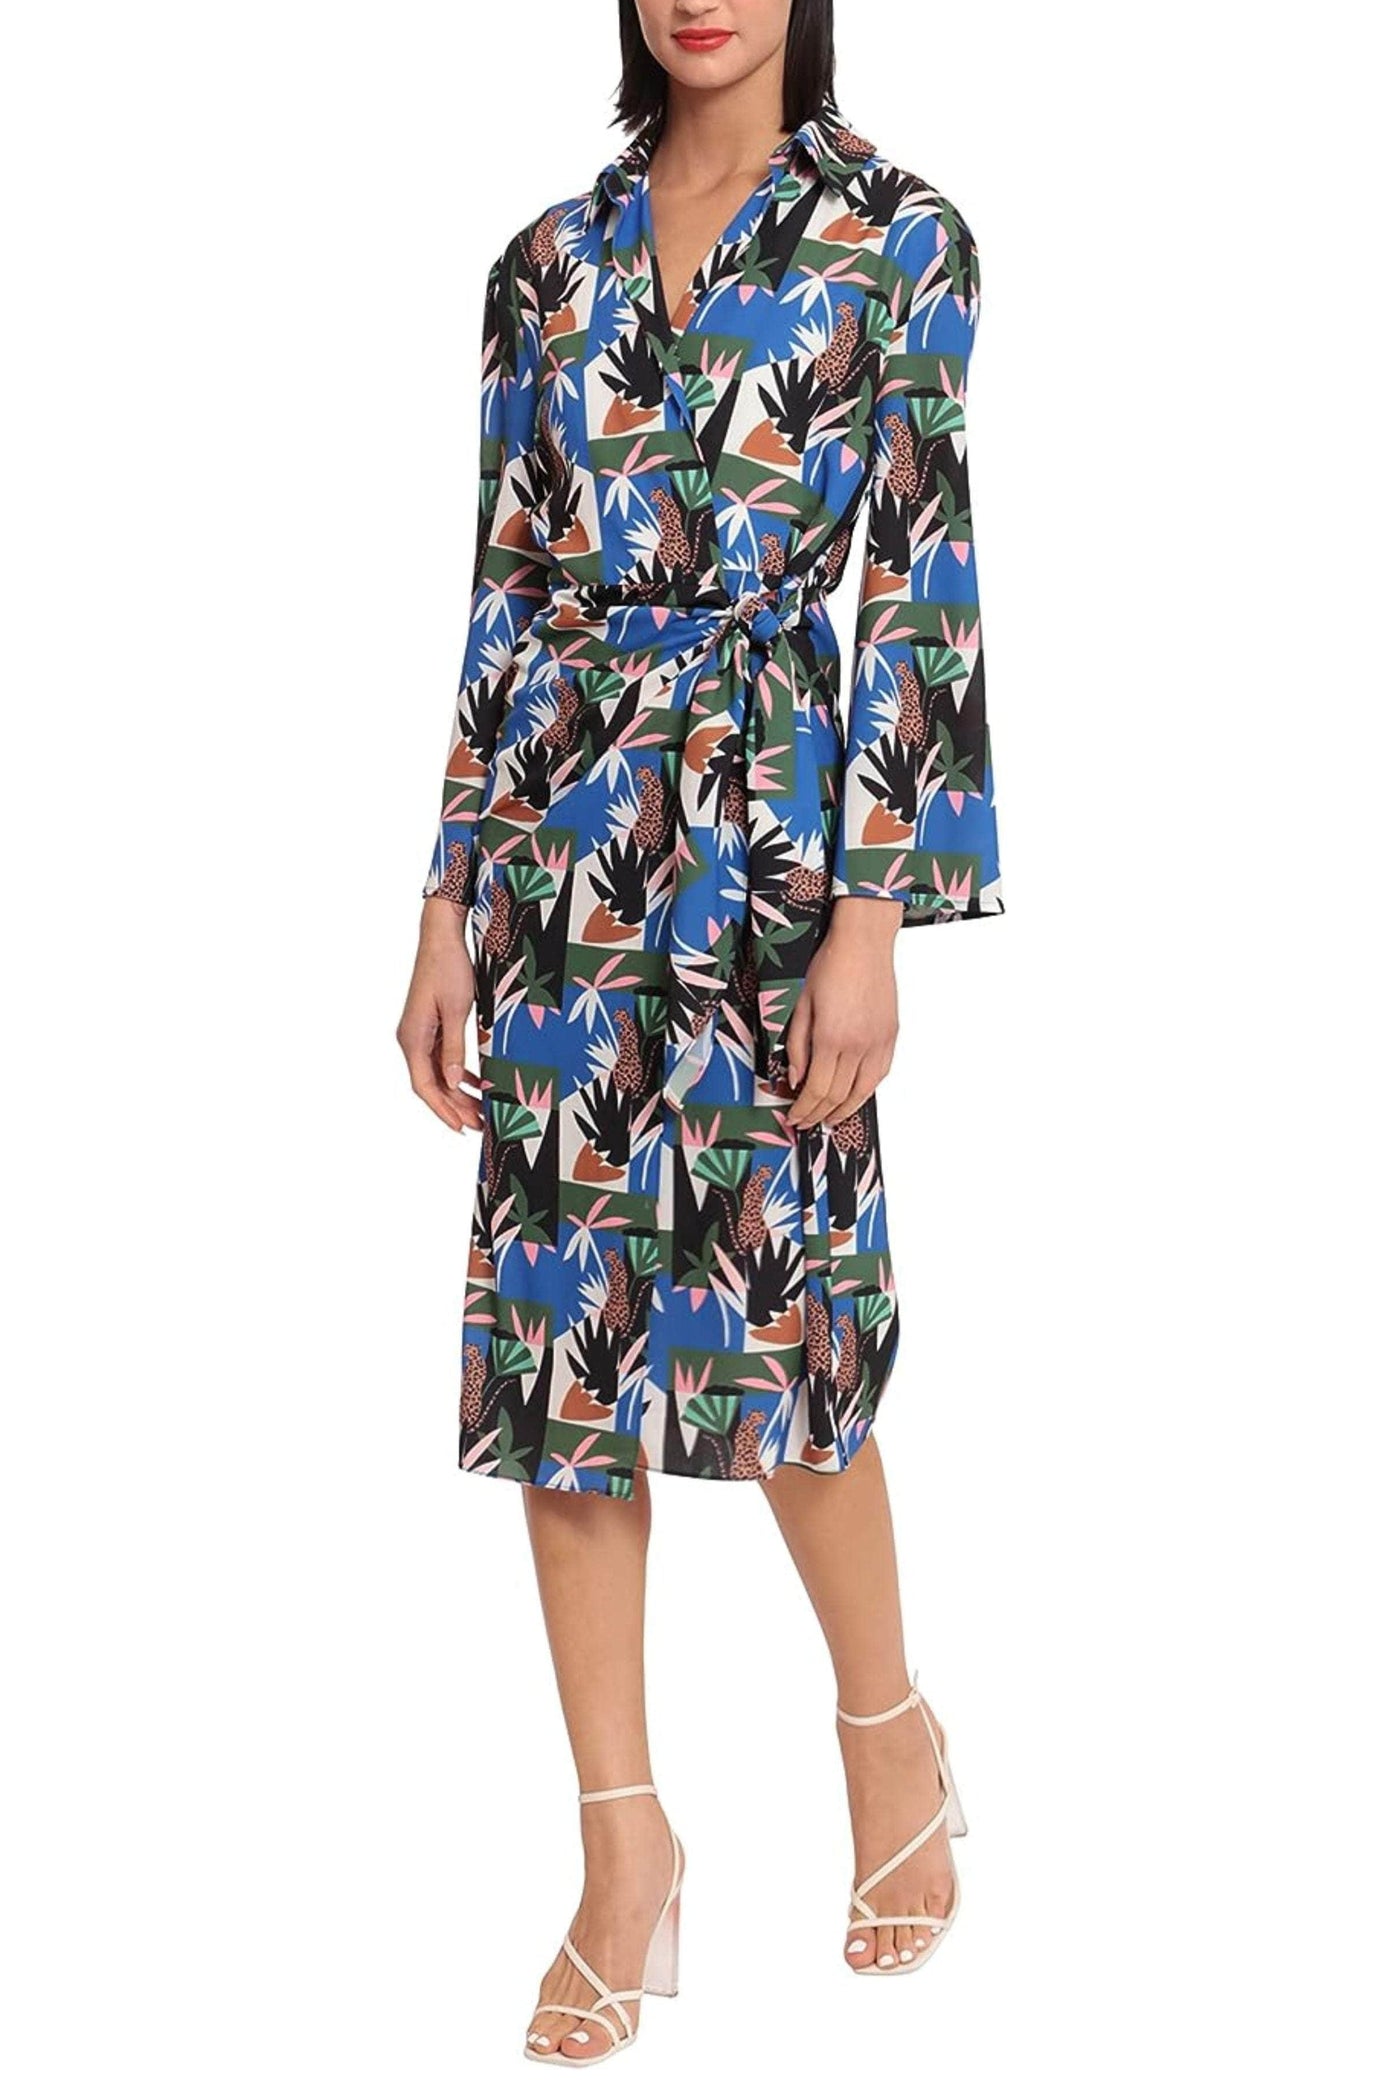 Donna Morgan D8248M - Jungle Print Long Sleeve Casual Dress Special Occasion Dresses